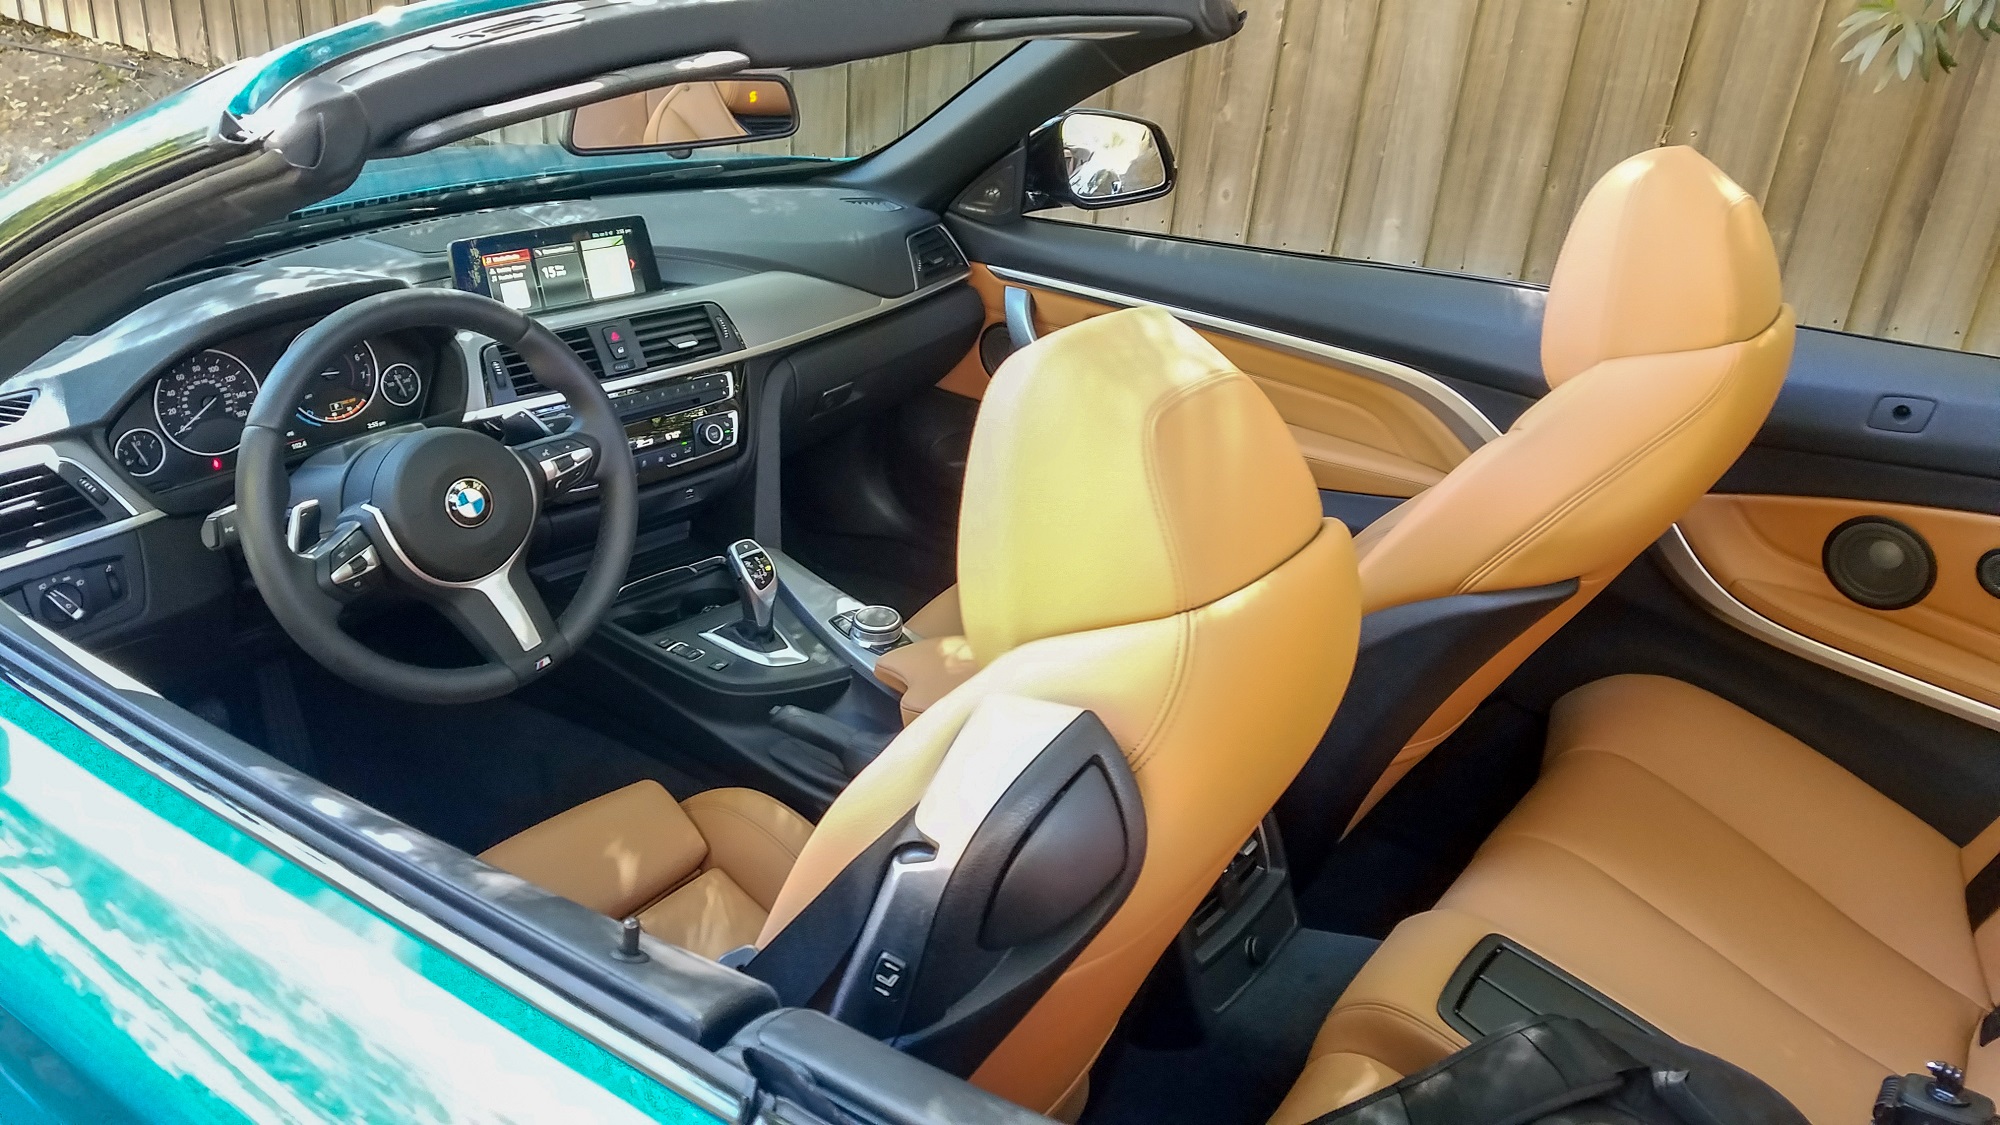 BMW 430i Convertible Review 2018 2019 Options Interior Exterior Wheels Price 6SpeedOnline.com